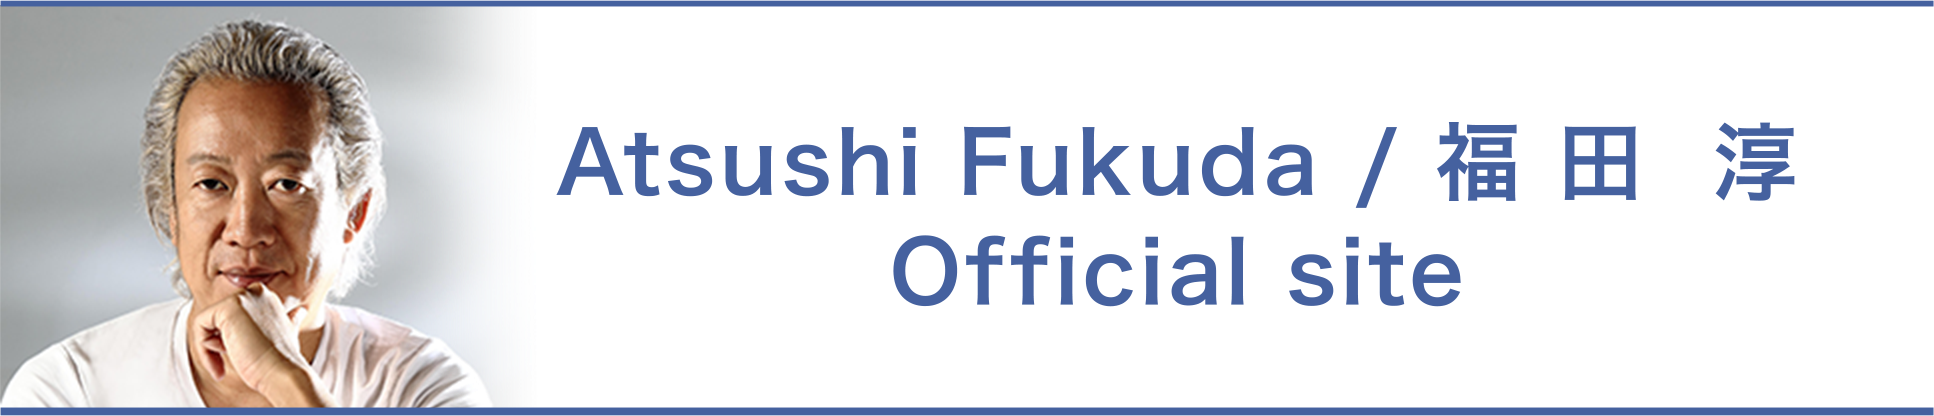 Atsushi Fukuda / 福田 淳 Official site